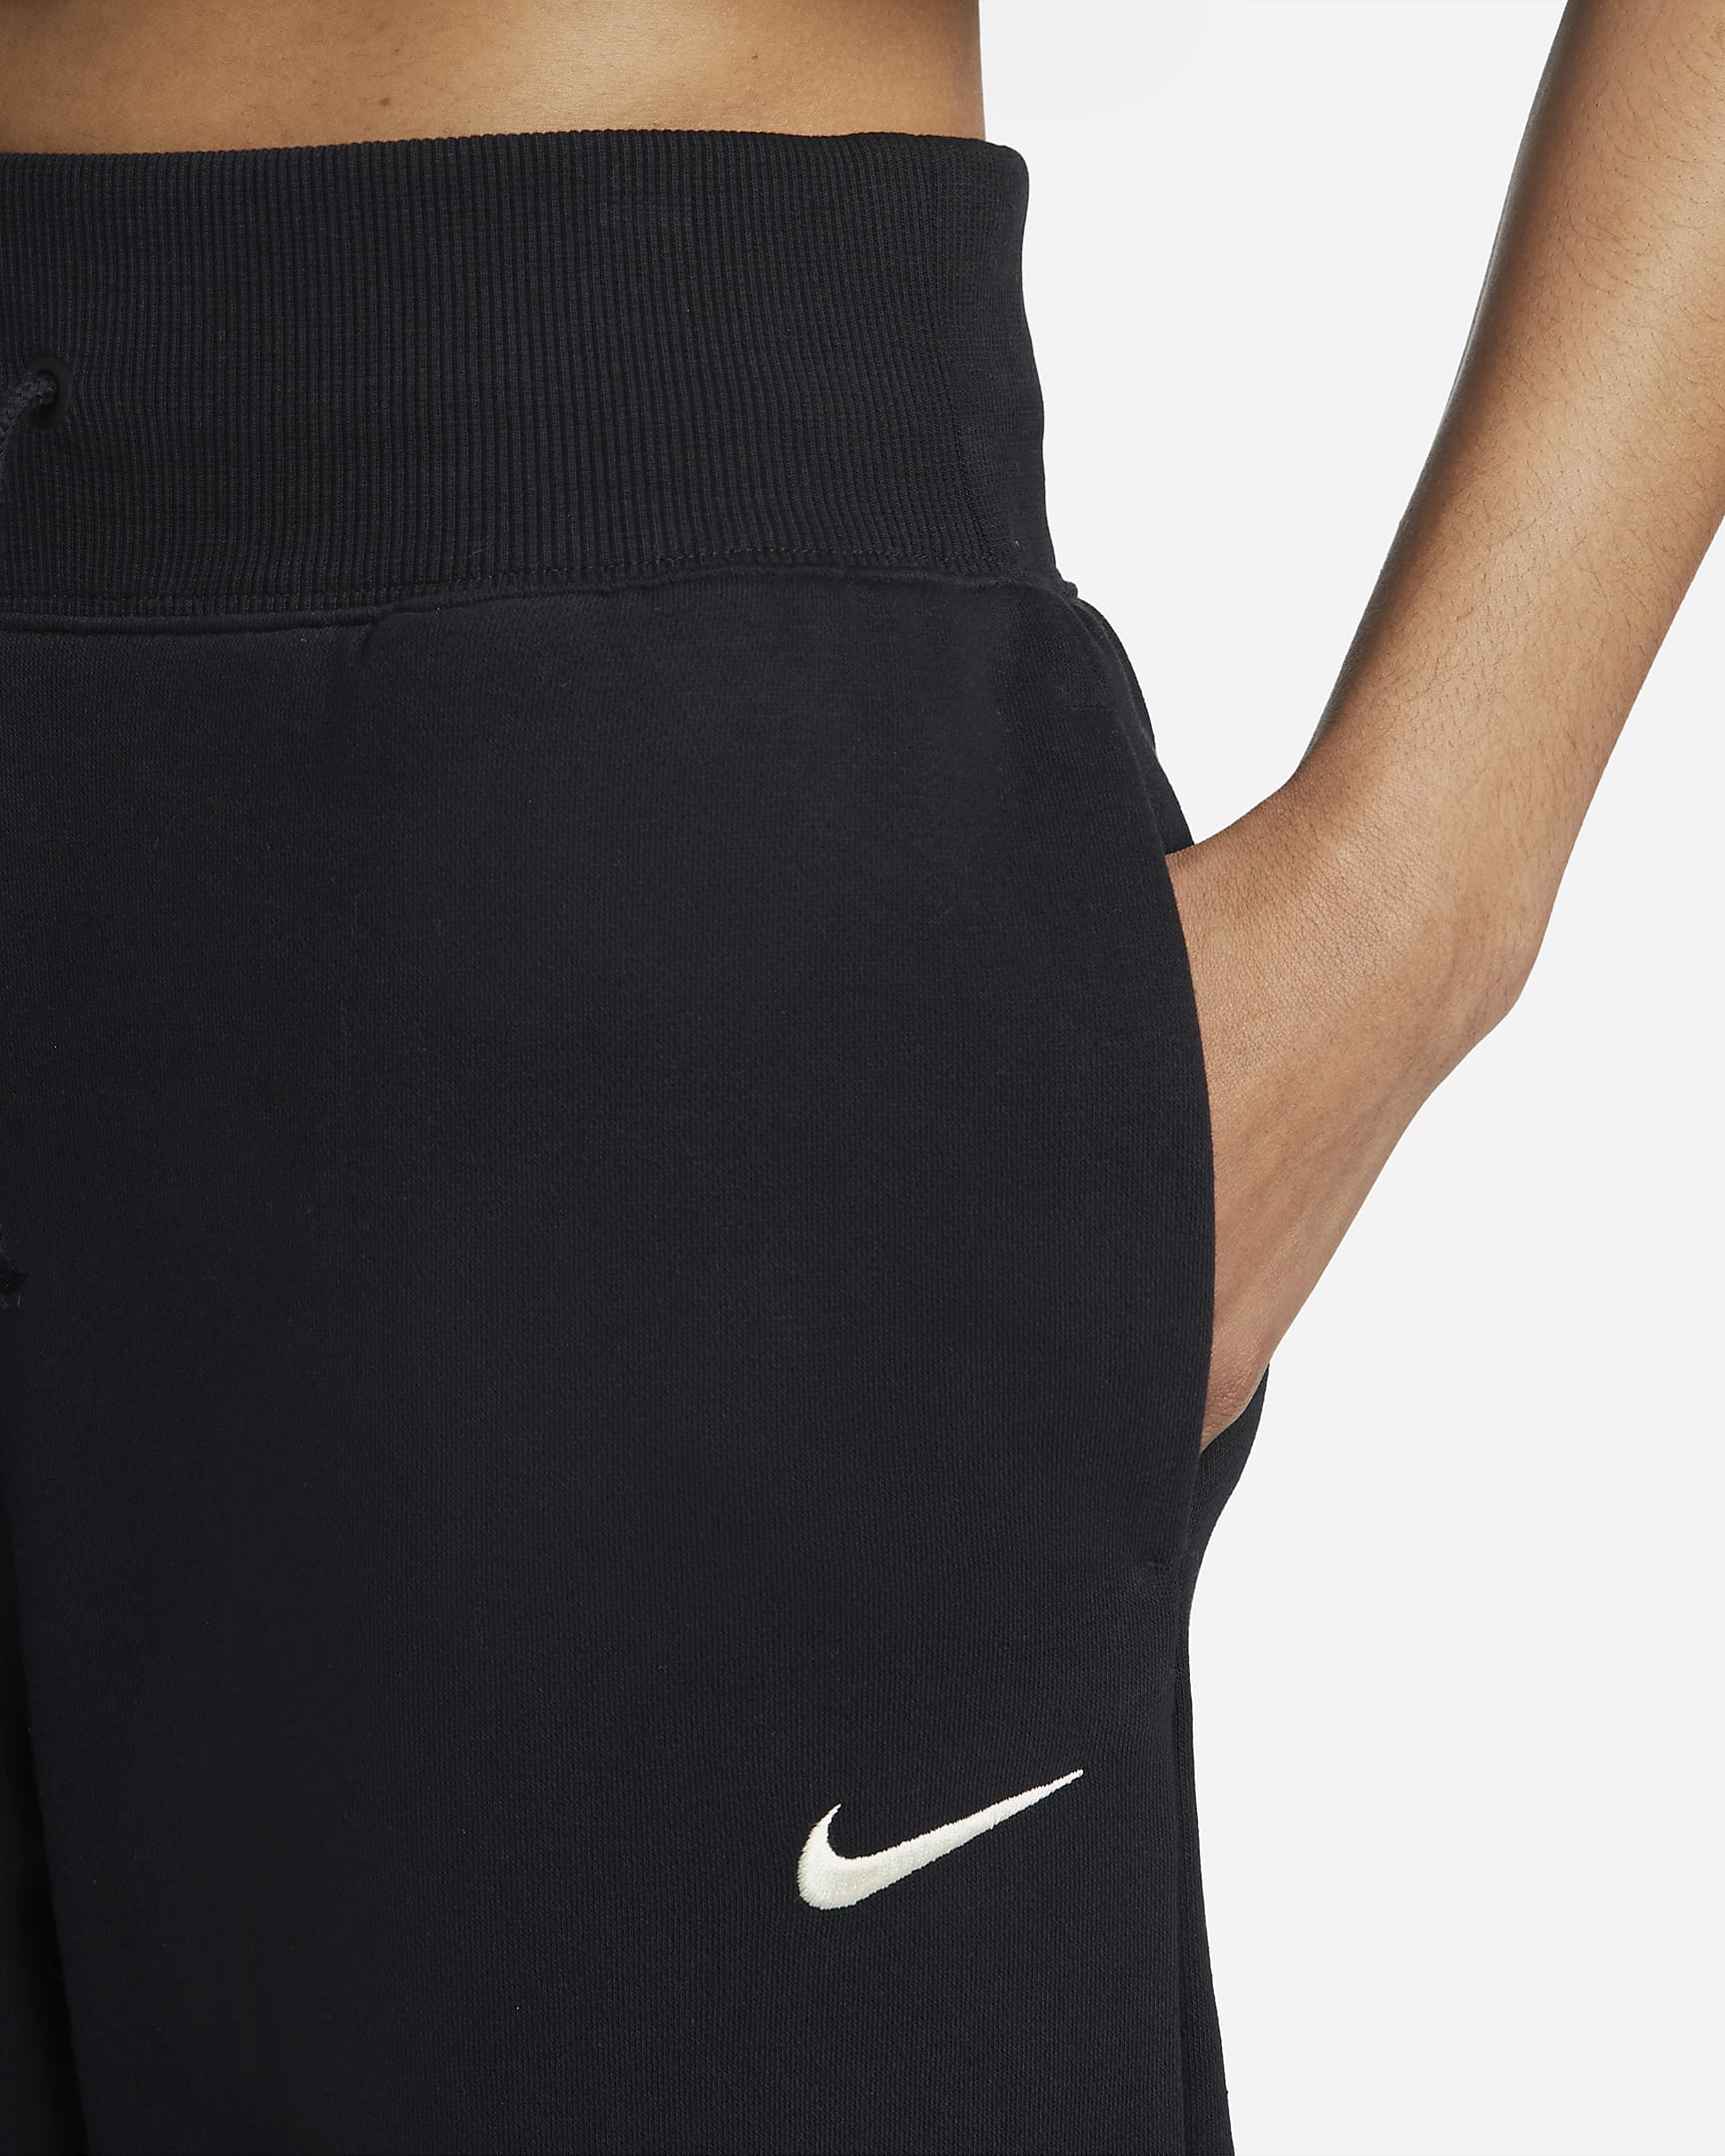 Pantaloni tuta Curve a 7/8 e vita alta Nike Sportswear Phoenix Fleece – Donna - Nero/Sail